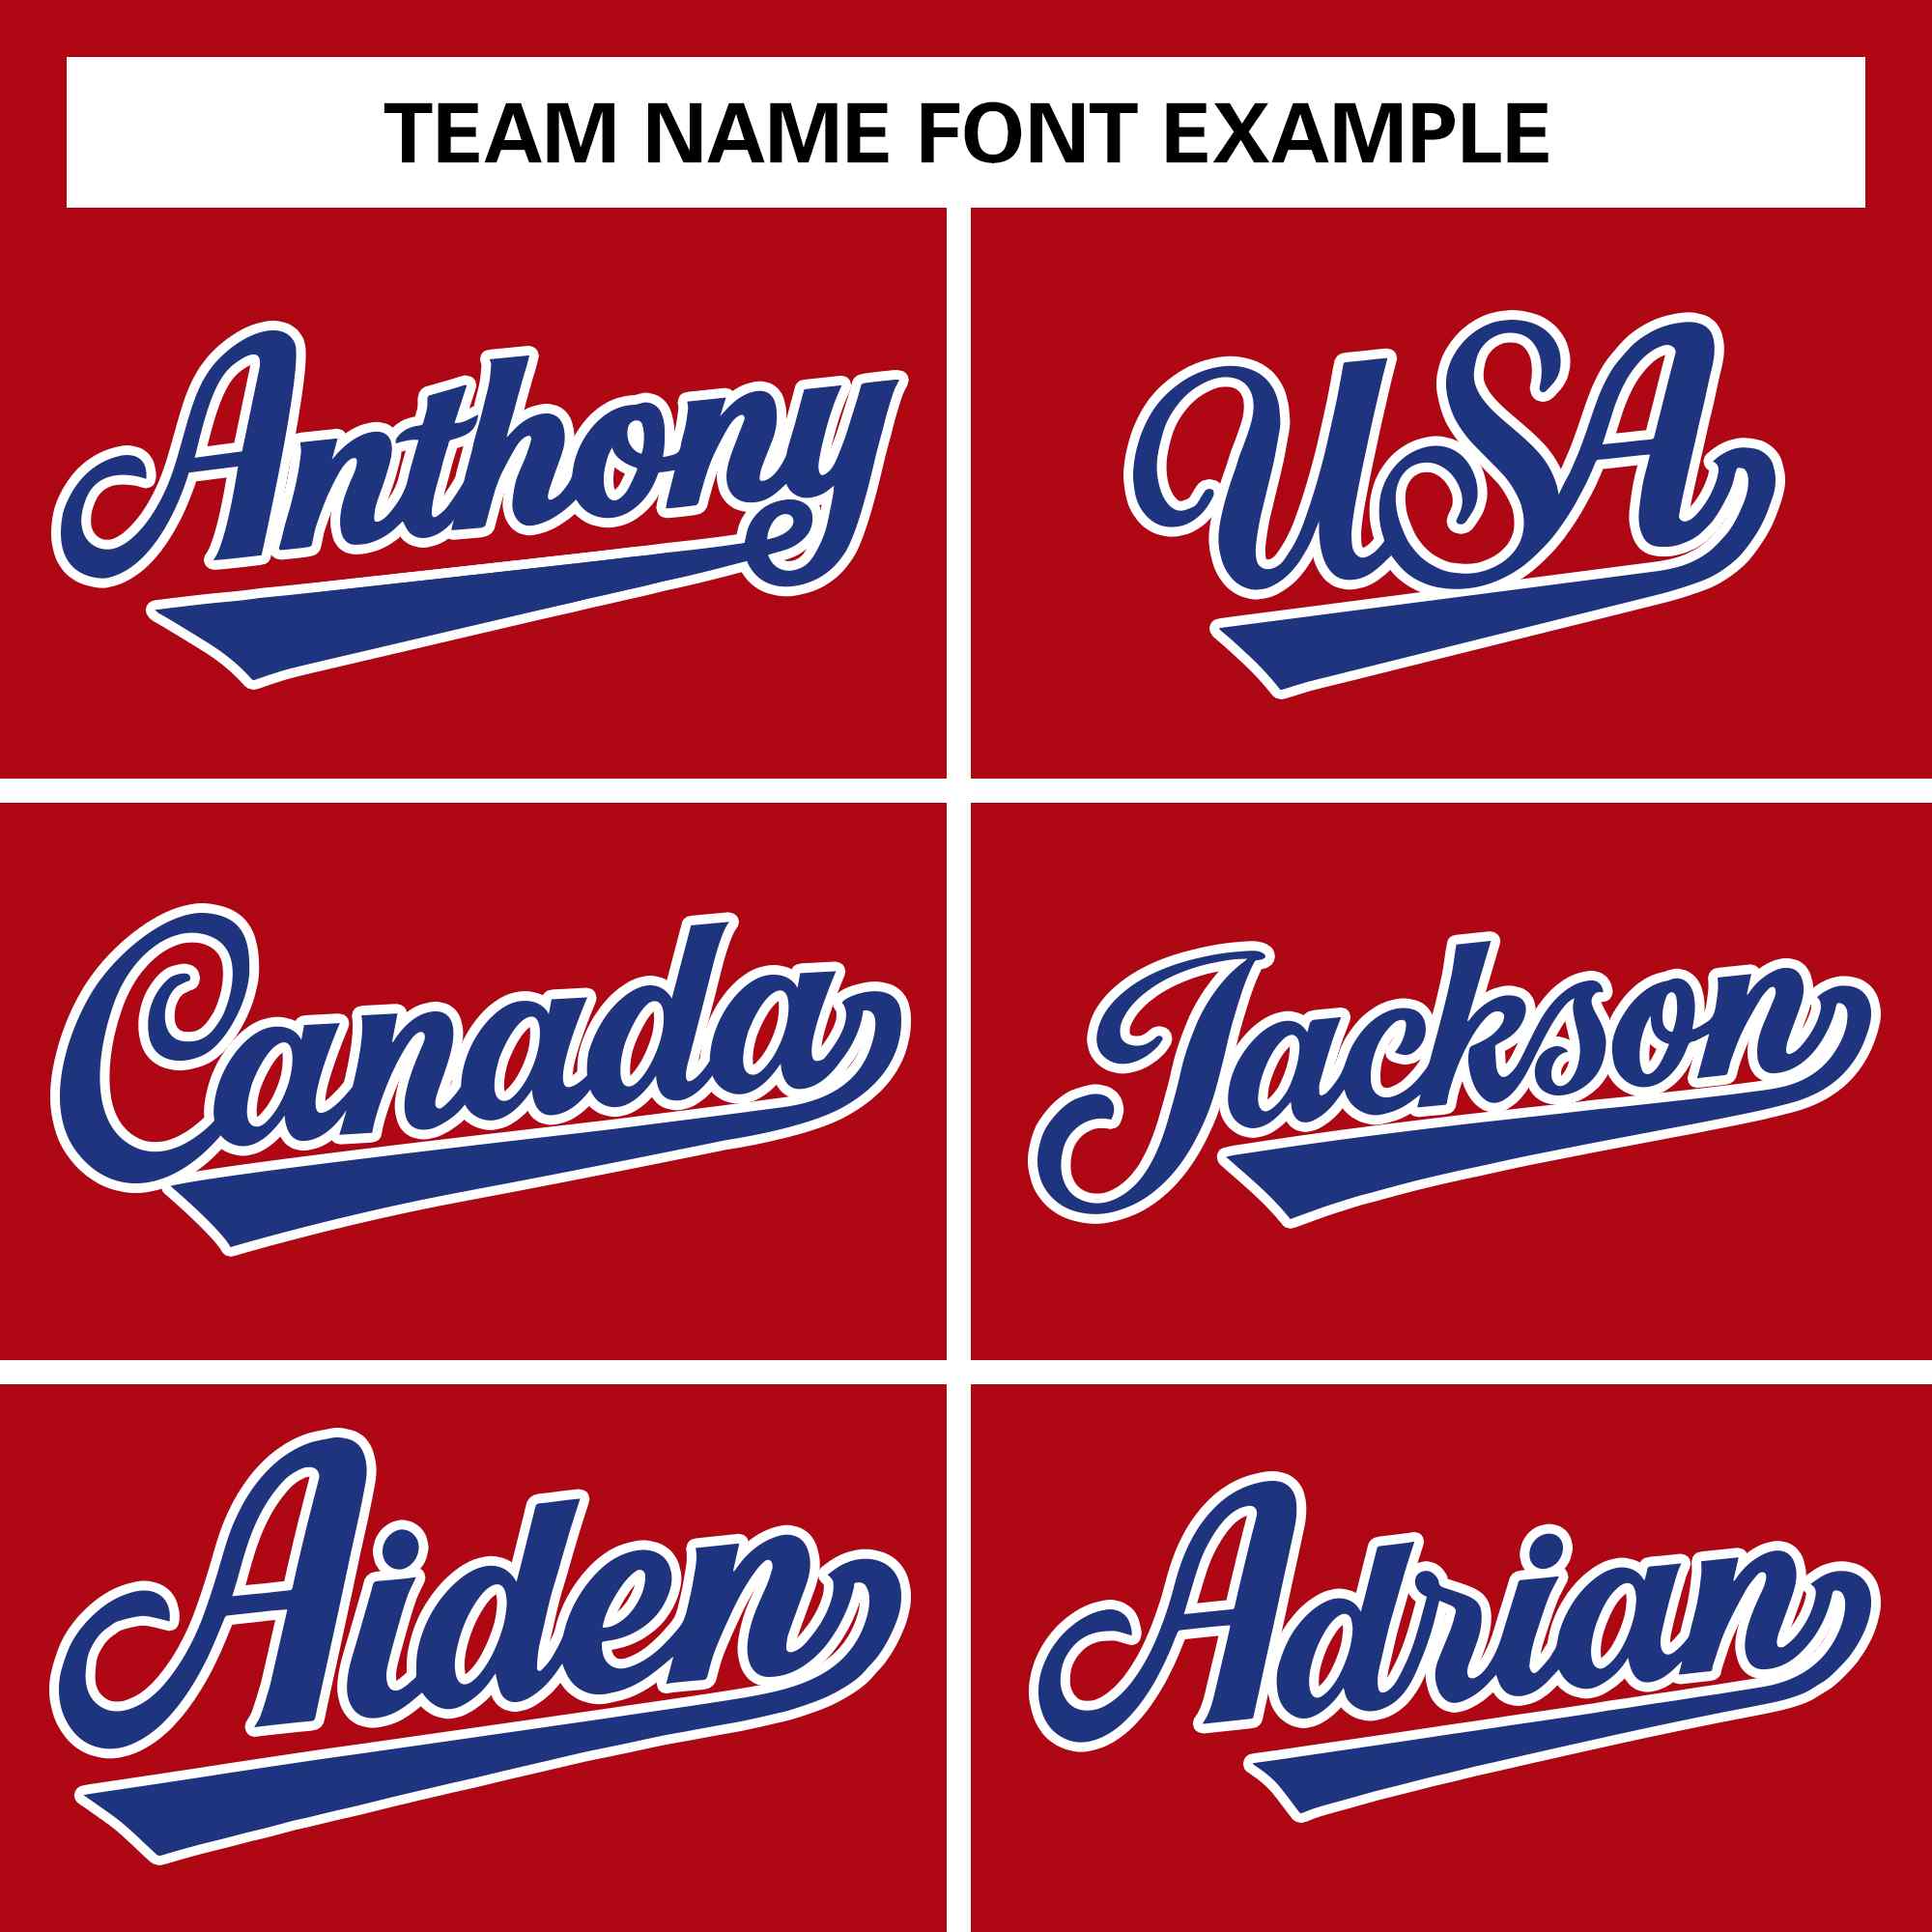 custom red and royal blue varstiy full-snap baseball batting jacket team name font example